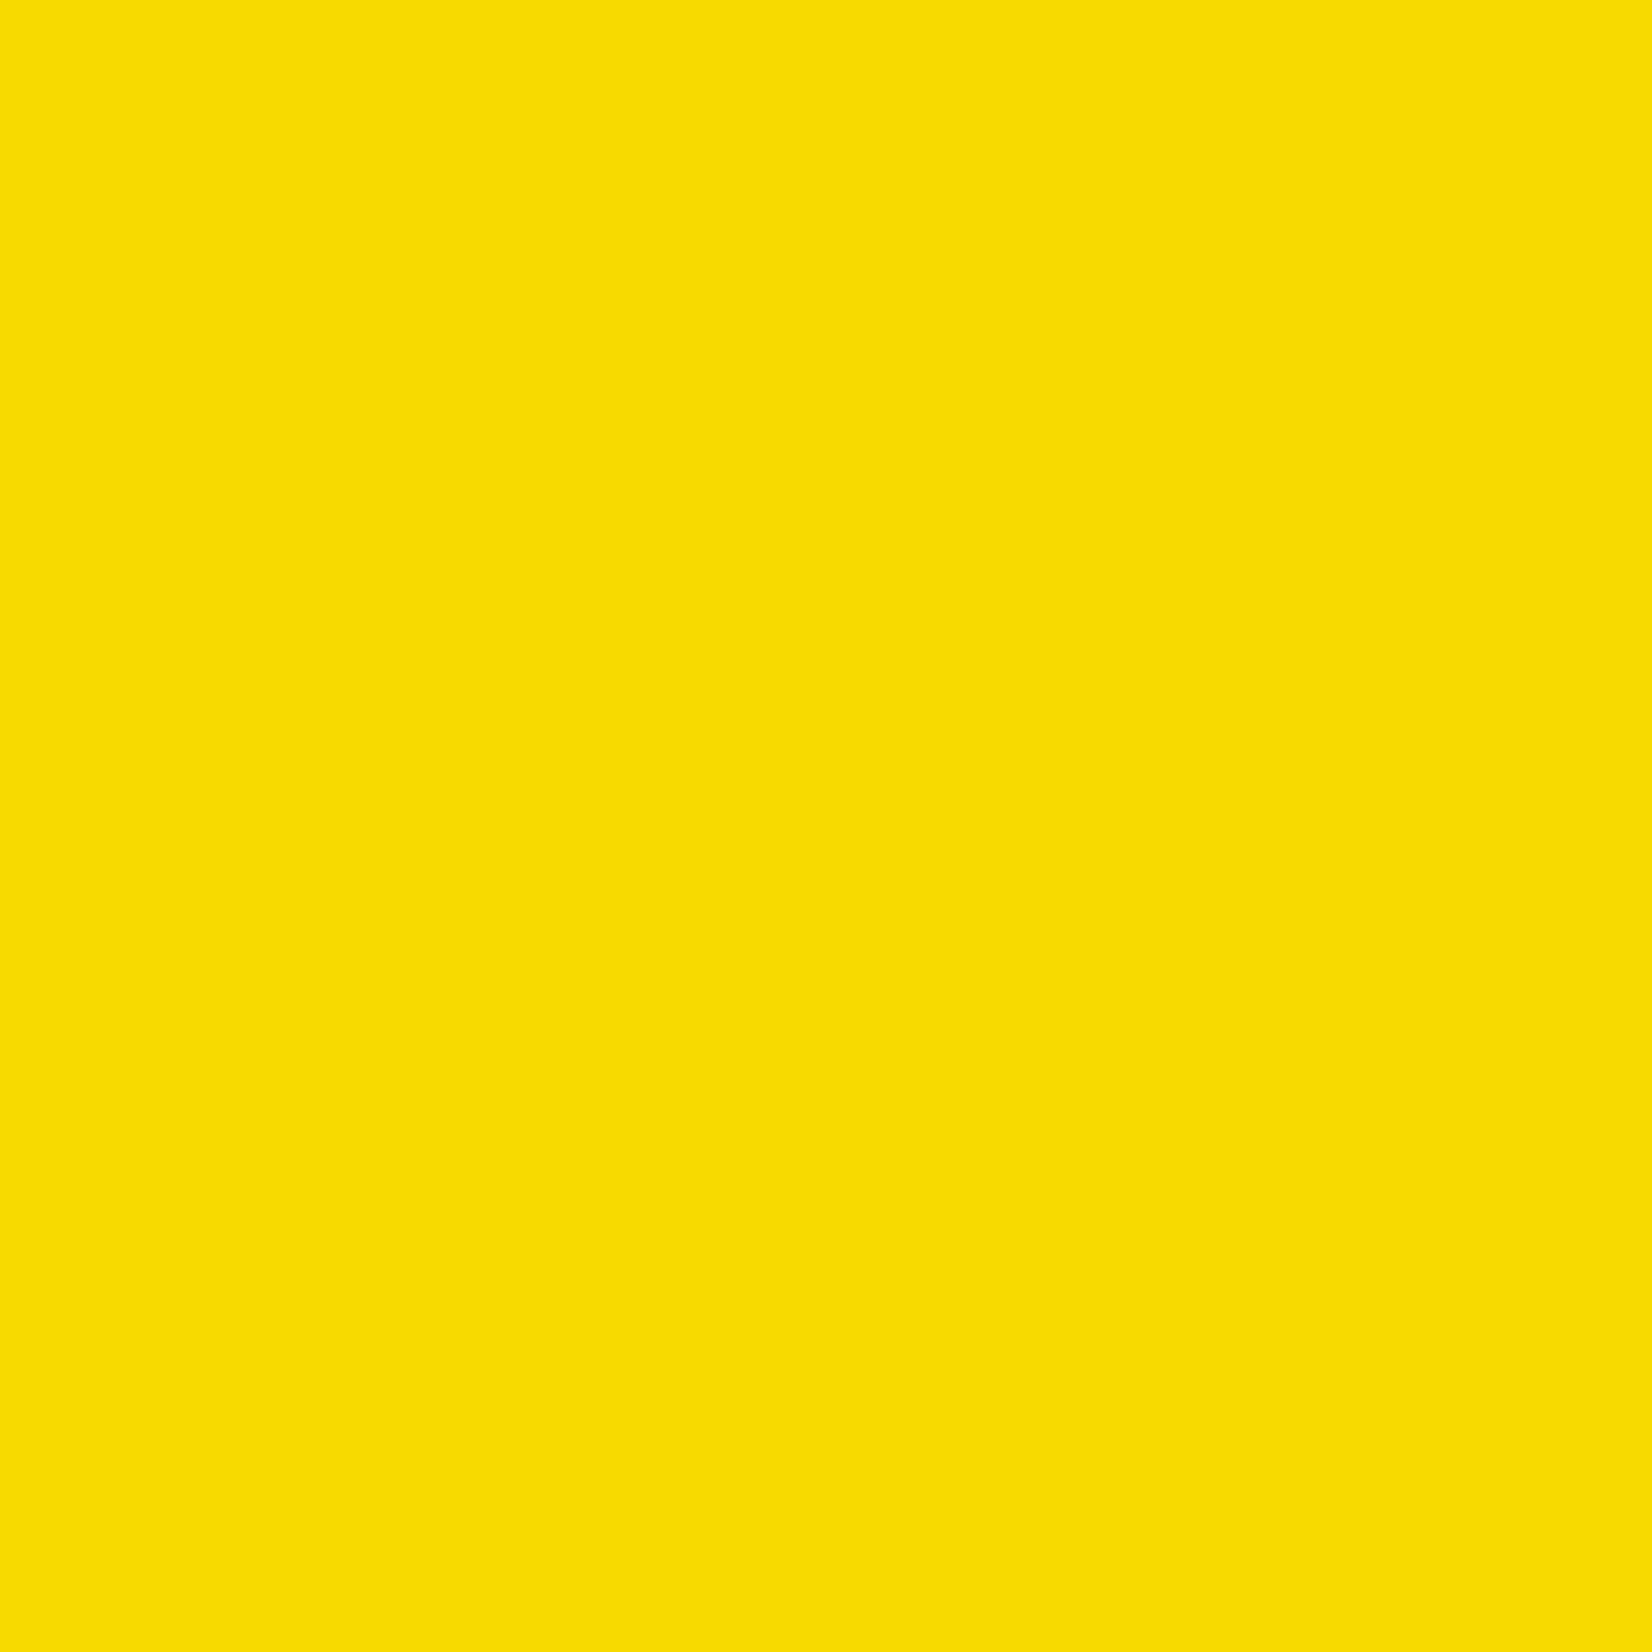 Jacquard Acid Dye .5 Oz Bright Yellow